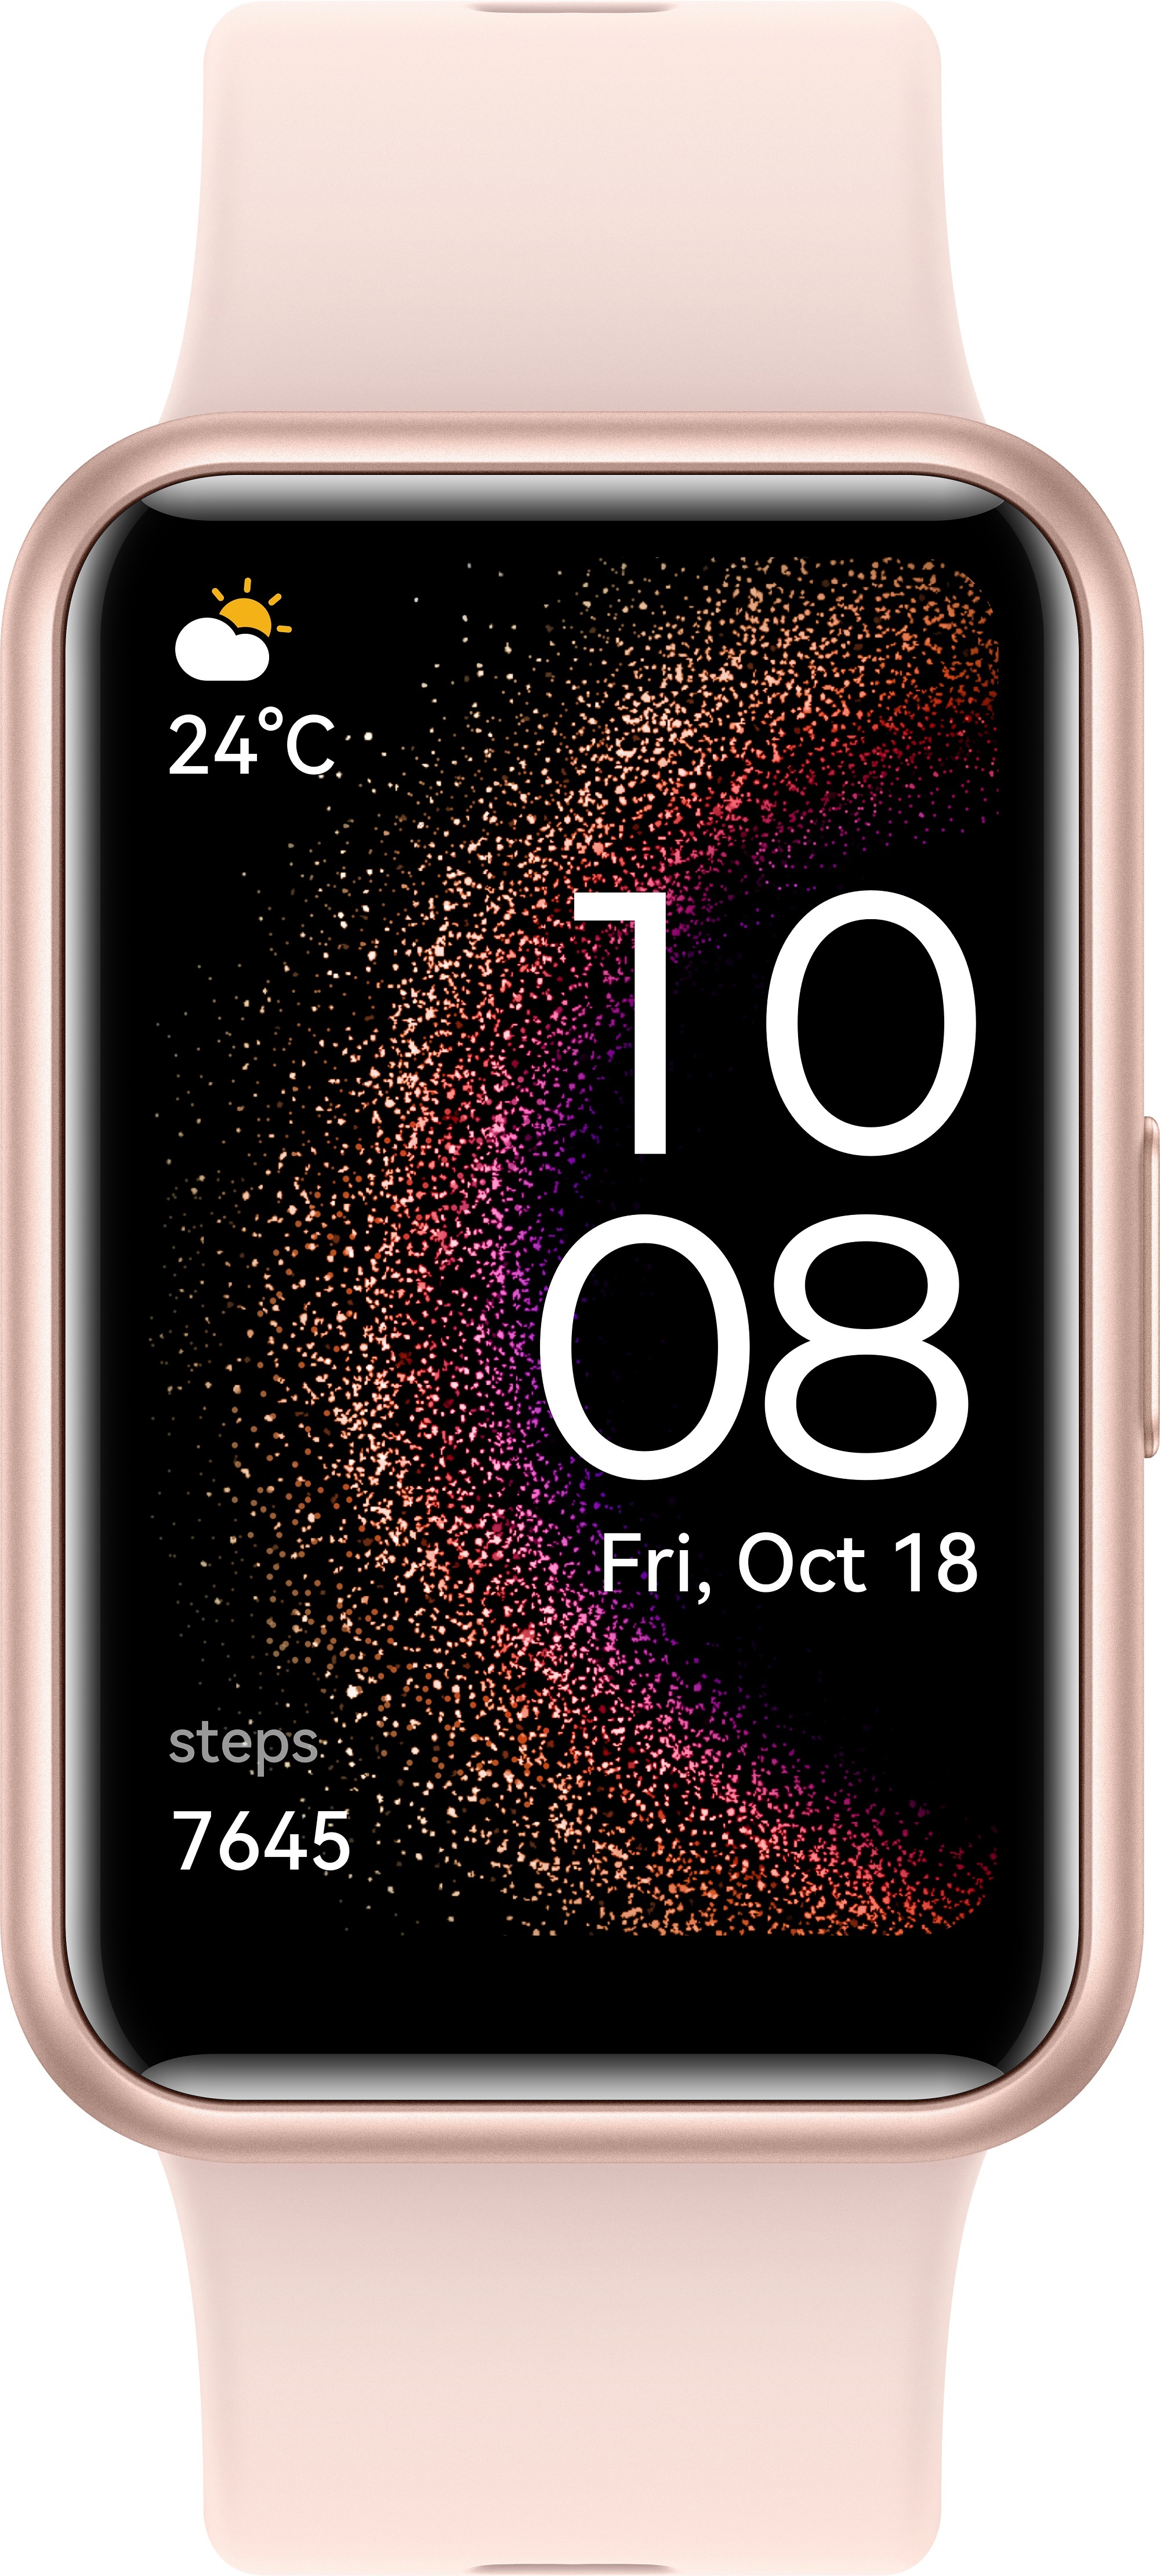 Zobrazit detail výrobku Huawei WATCH FIT SE - Nebula Pink